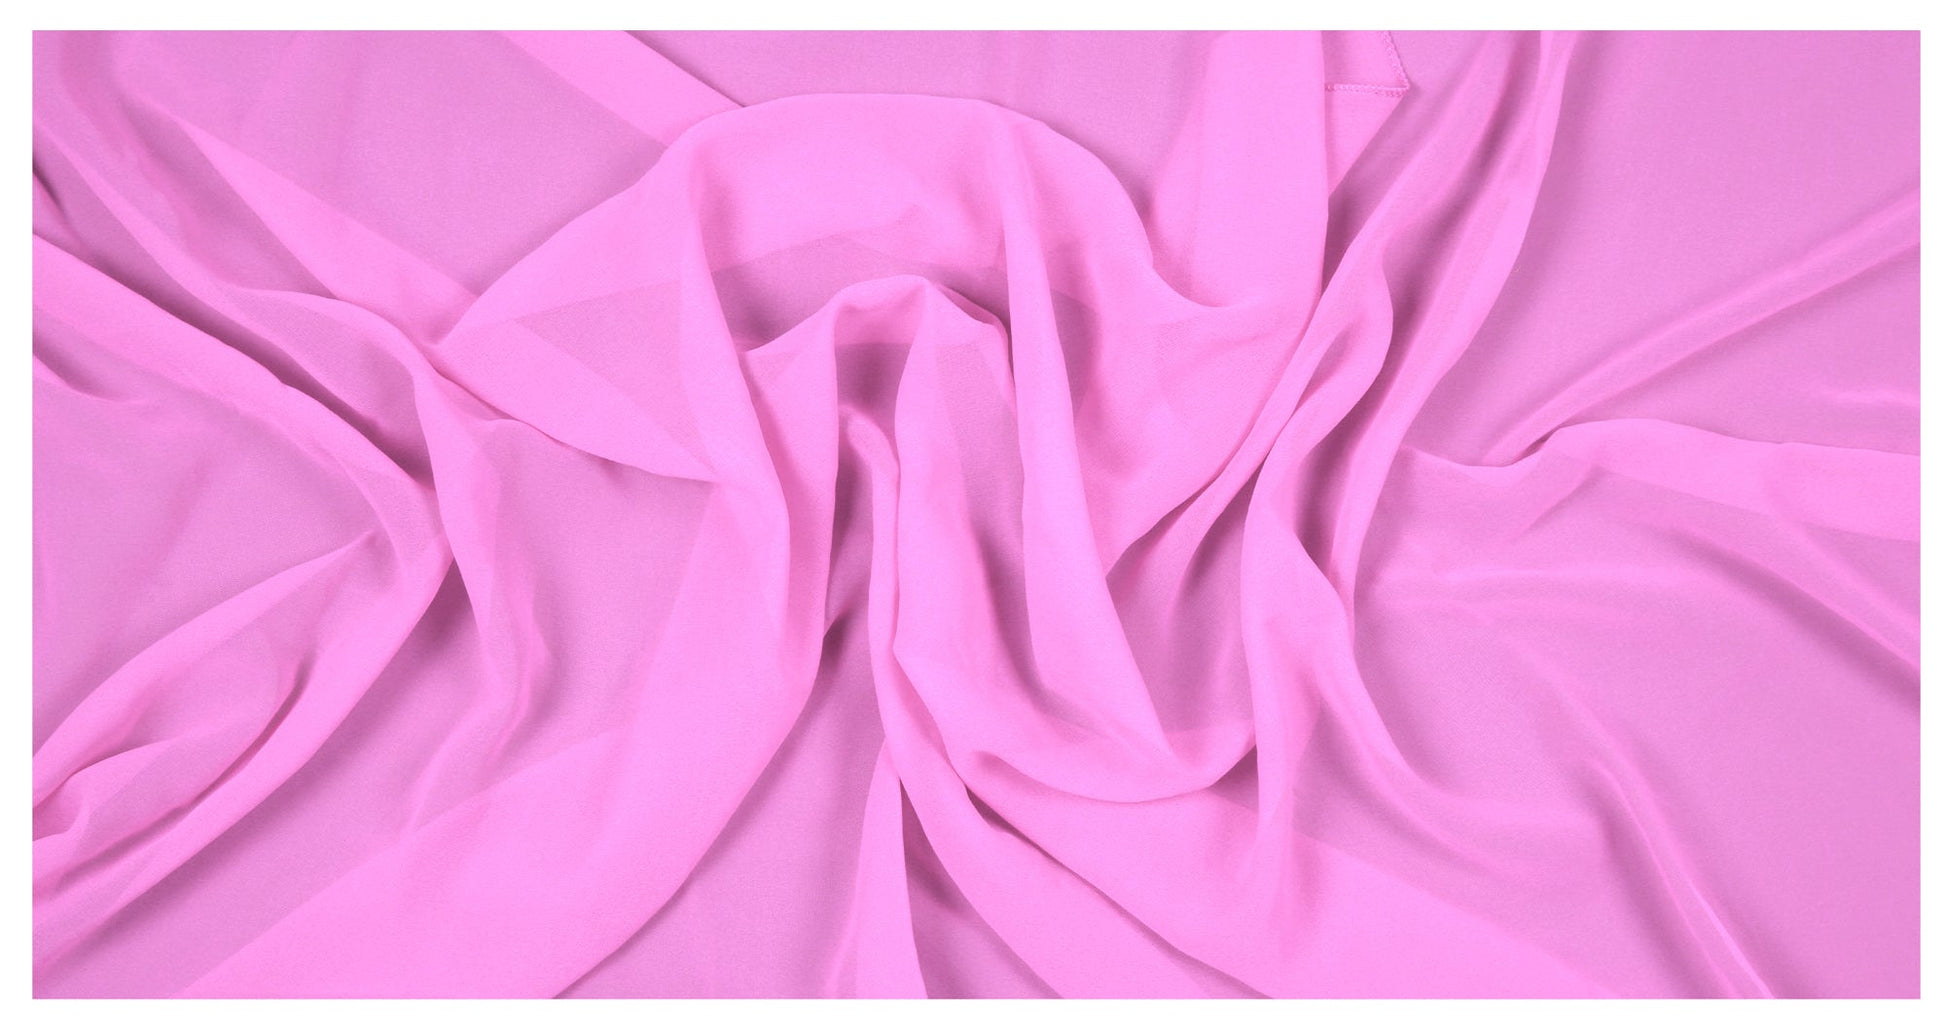 Bubblegum Pink,6a769743-bde5-4598-a911-8cf5e444f008